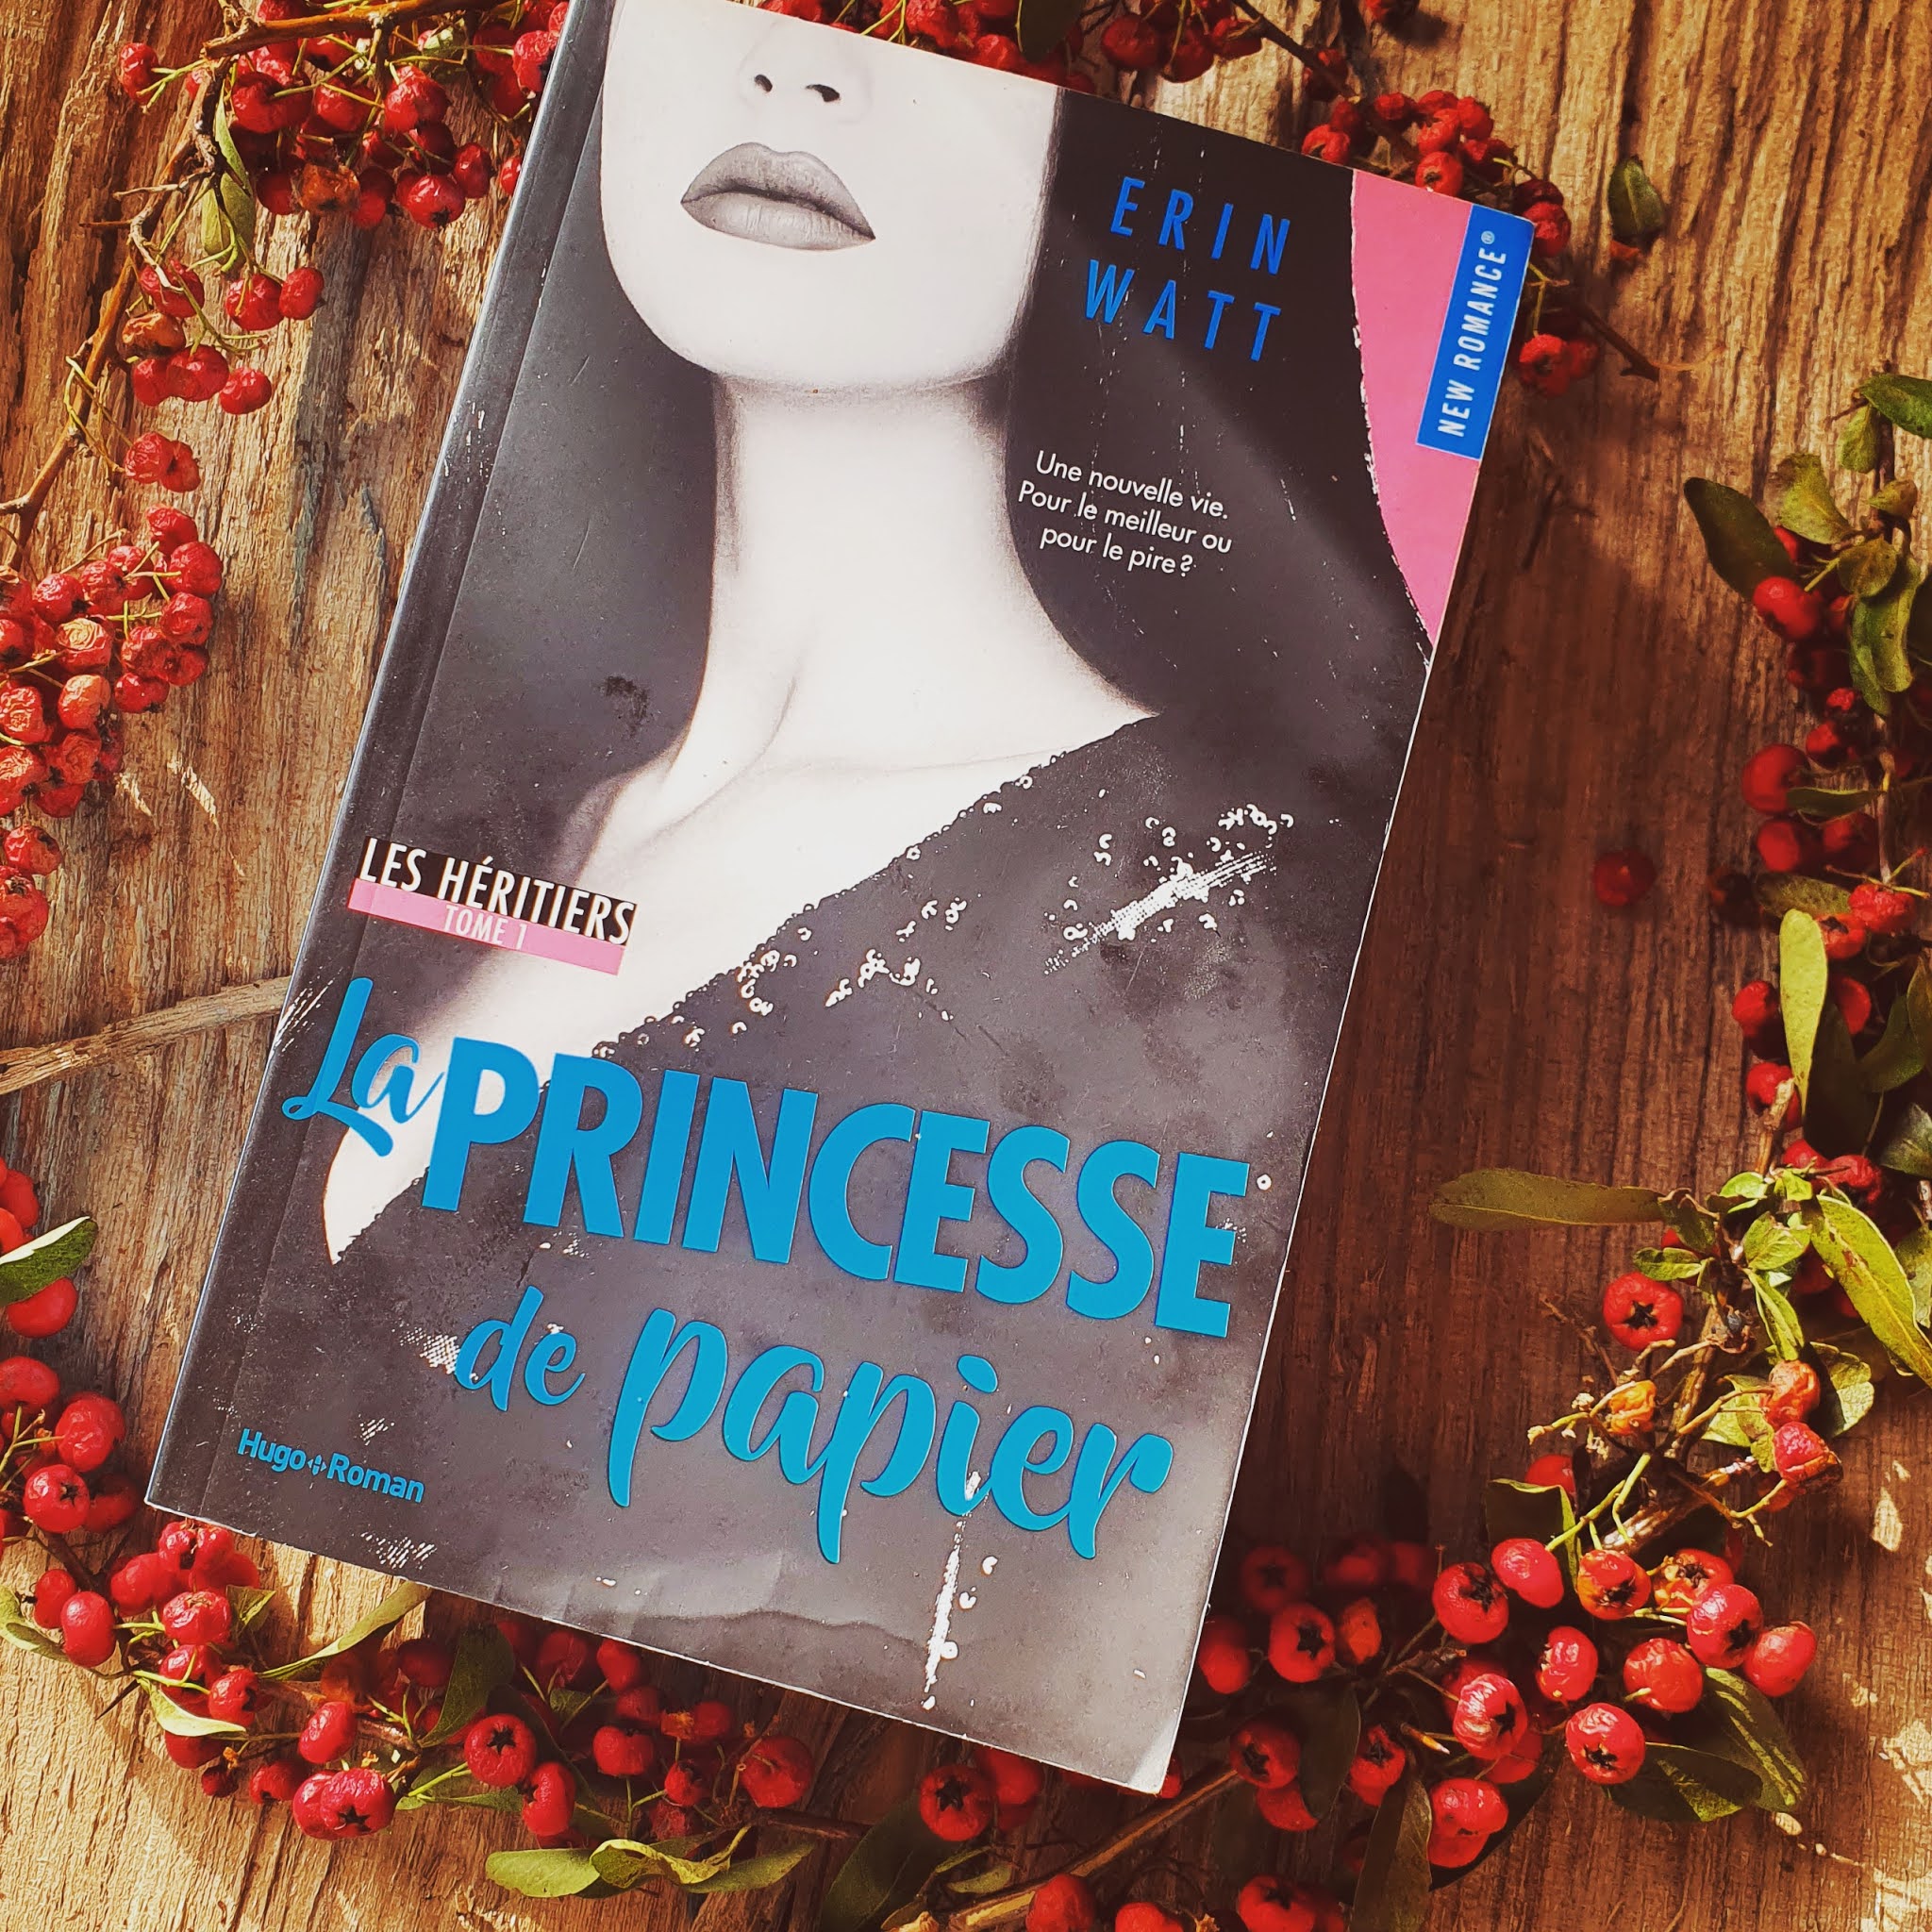 Les héritiers, tome 1 : La princesse de papier de Erin Watt